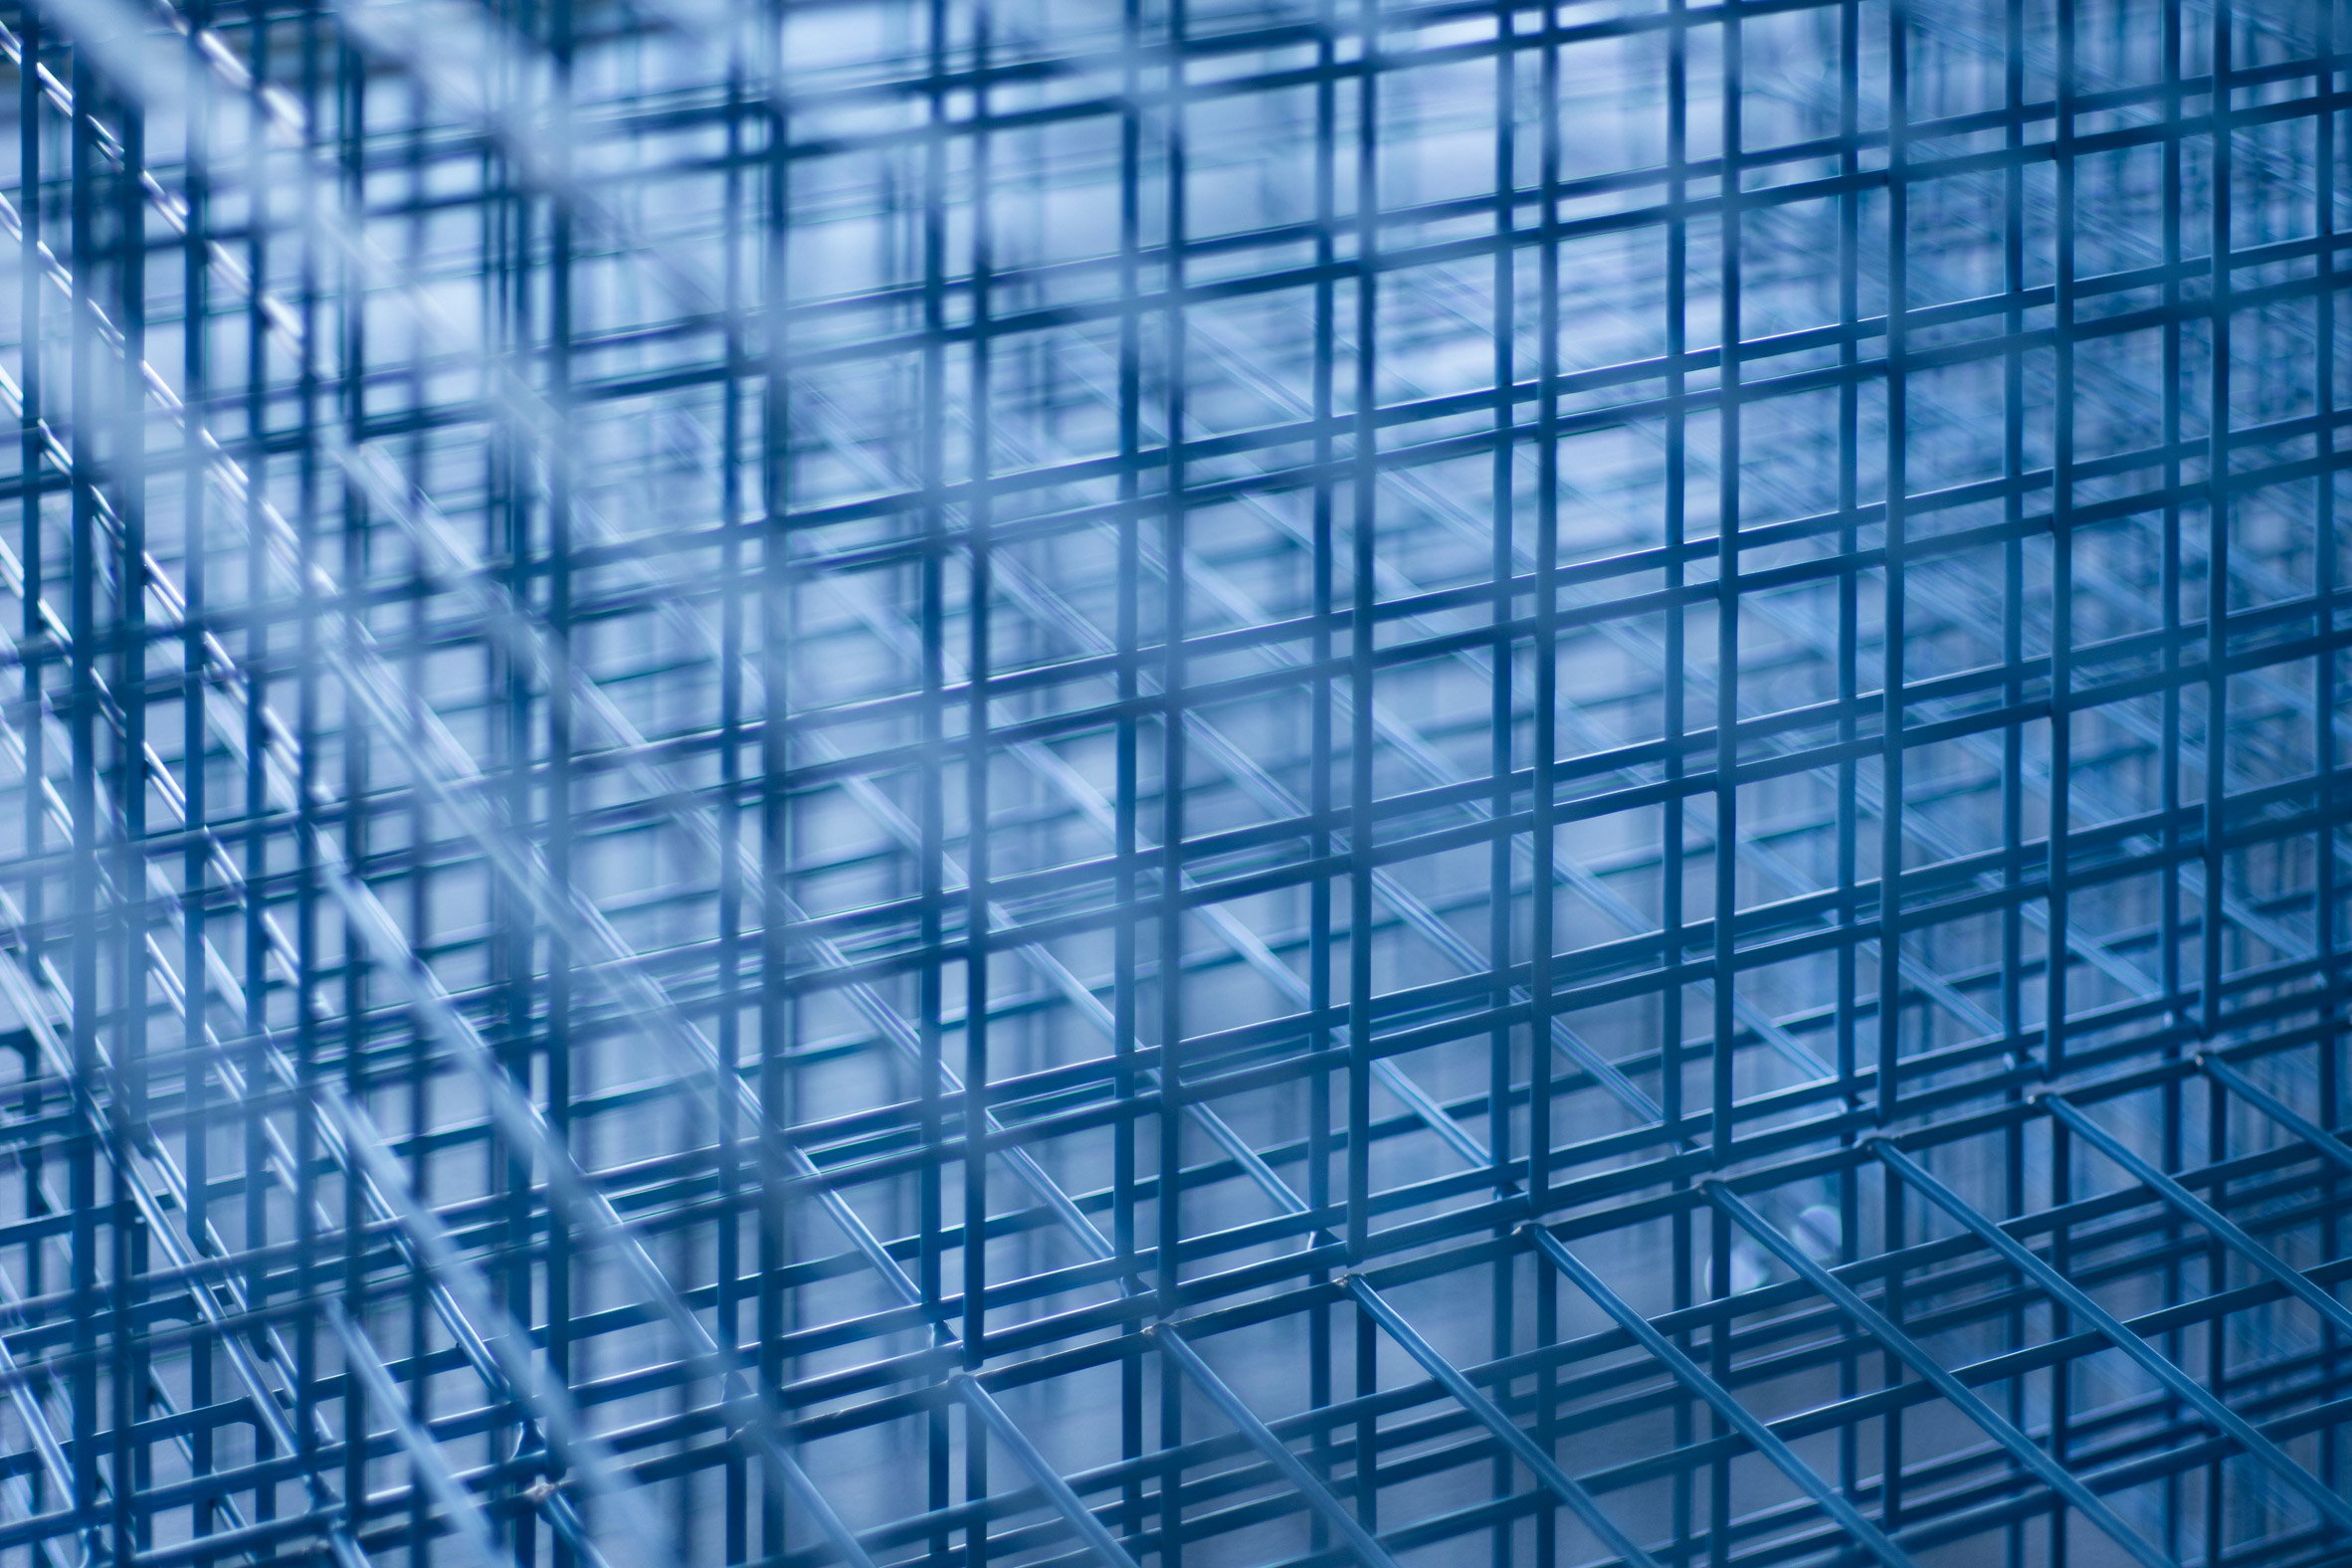 Detail shot of the gridded mesh